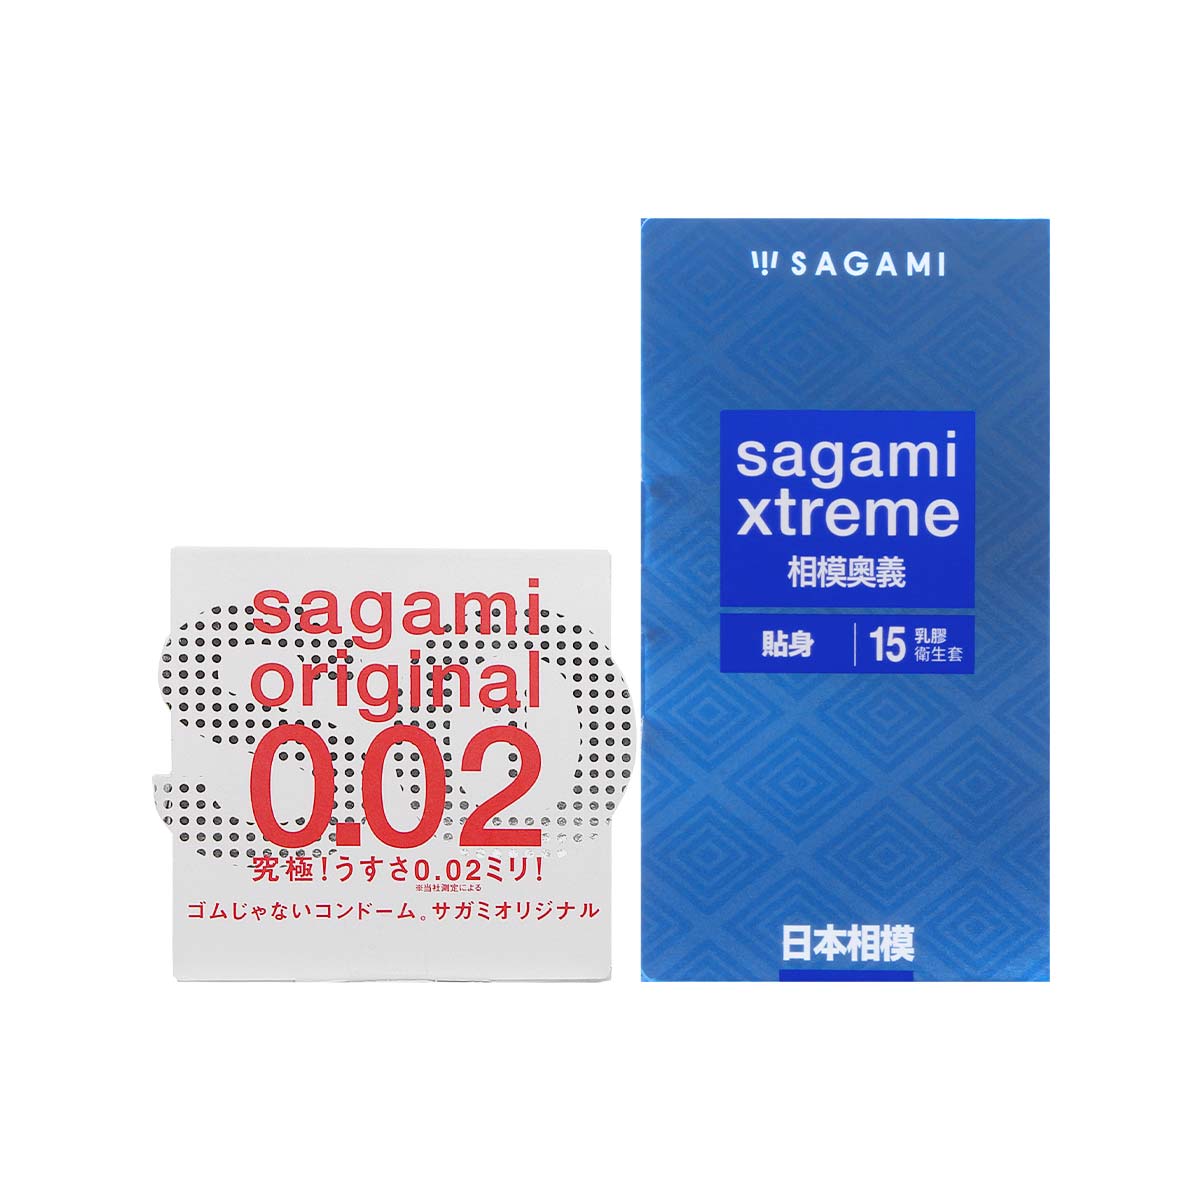 Sagami Xtreme Feel Fit 15's Pack Latex Condom + Sagami Original 0.02 1's Pack PU Condom-thumb_2